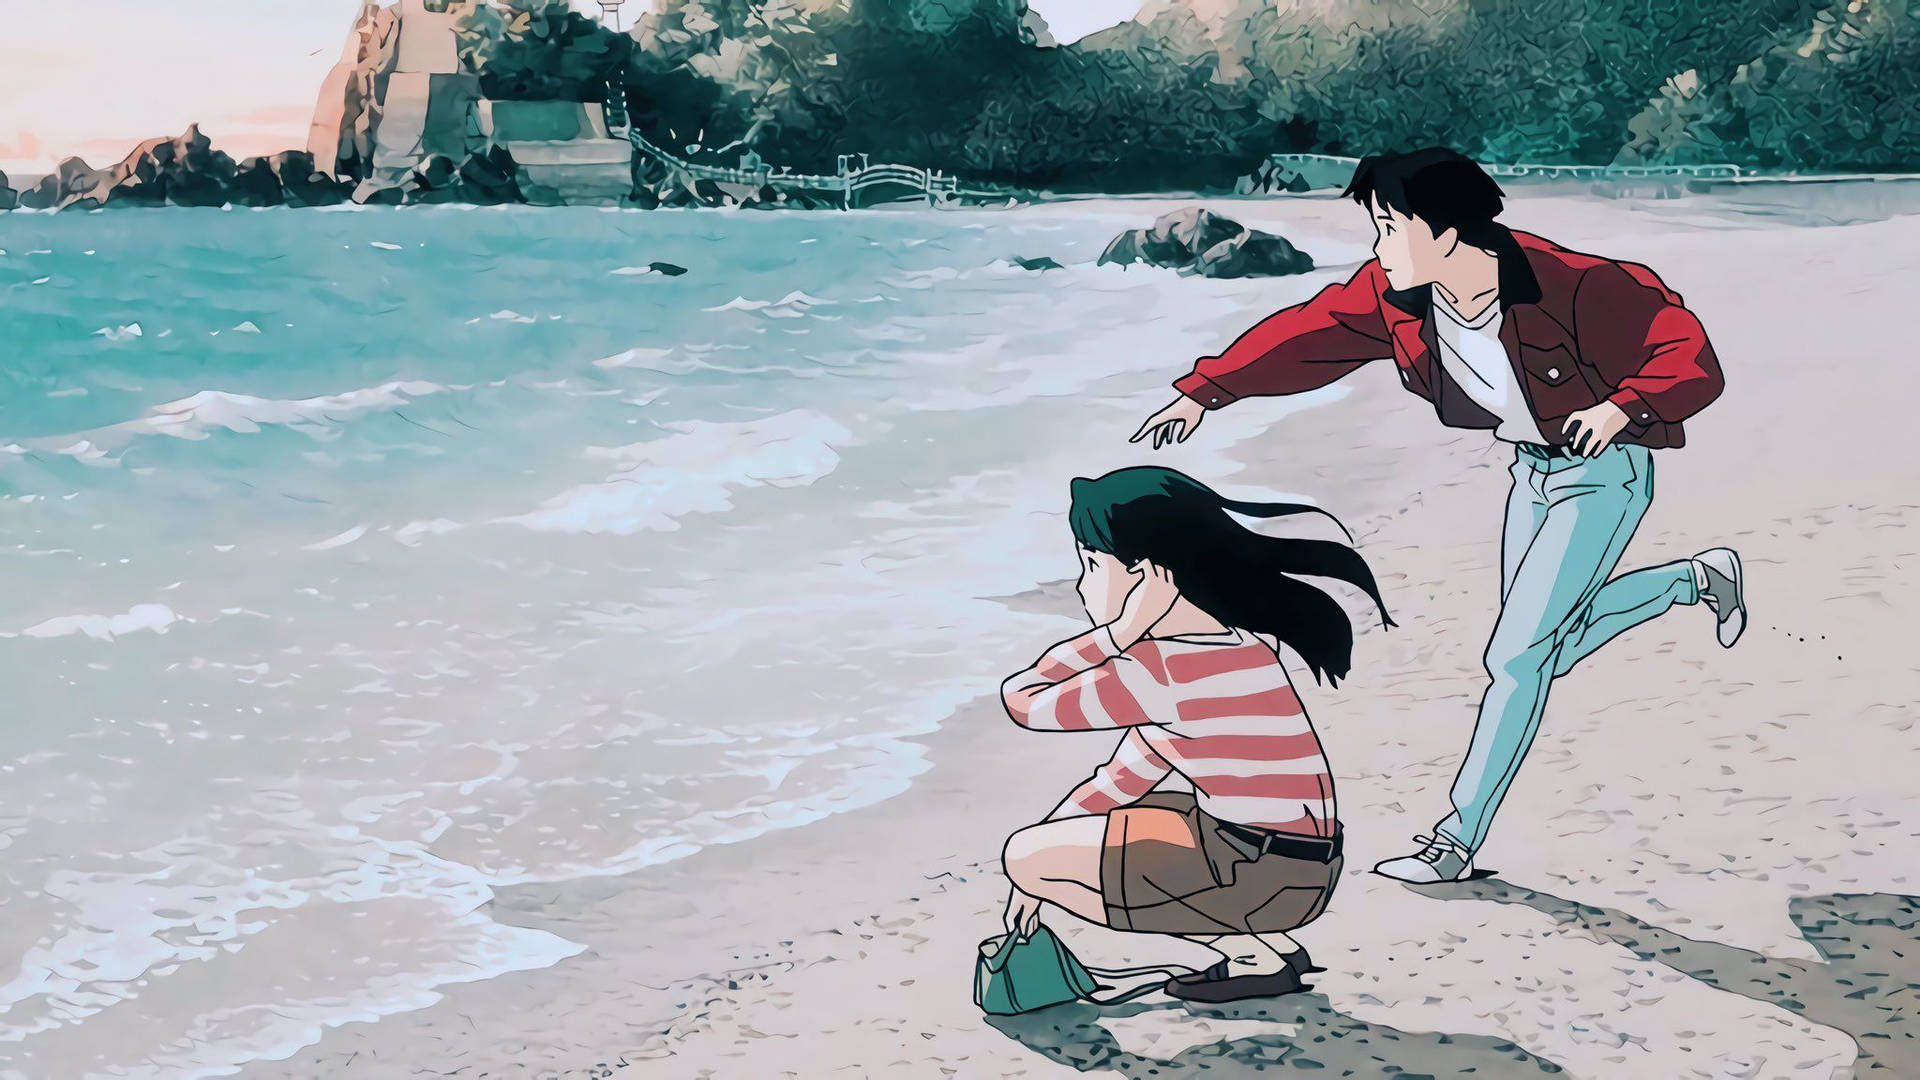 Ocean Waves hình nền - Studio Ghibli hình nền (43615172) - fanpop